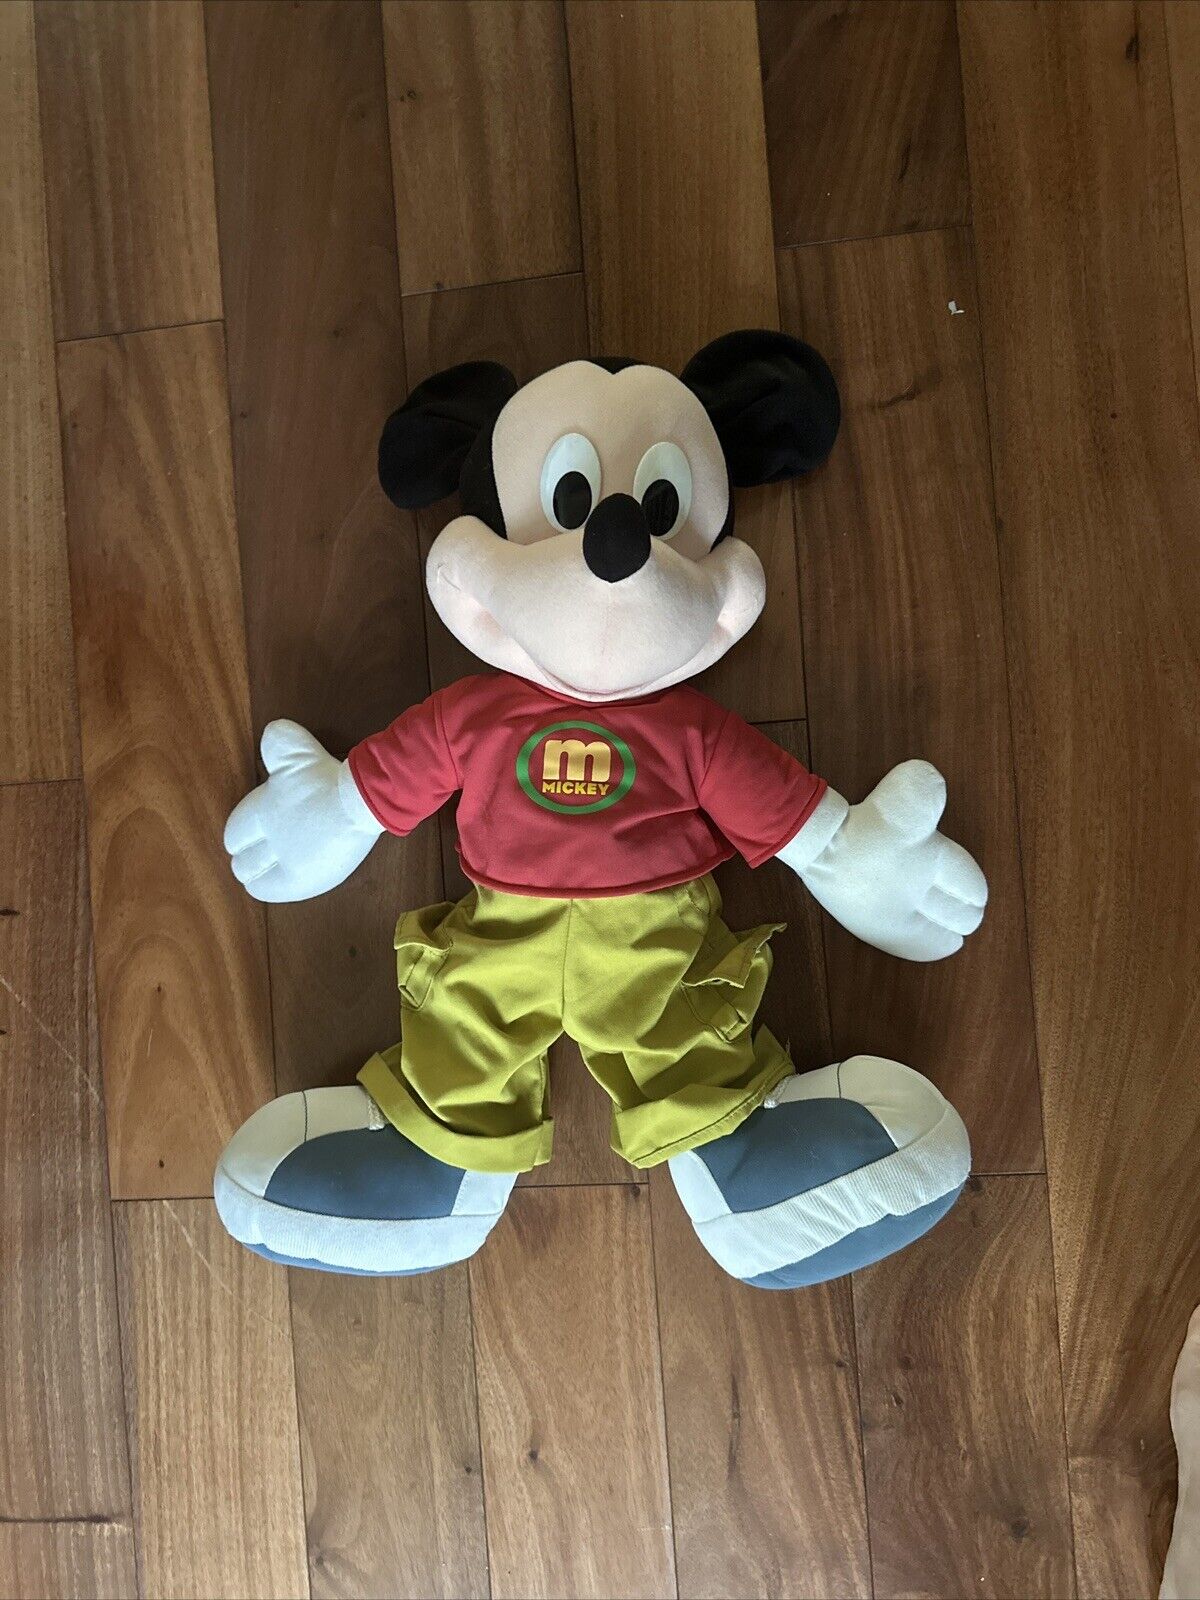 2000 Mattel Jumbo MICKEY MOUSE Fisher-Price Stuffed Plush Toy Disney Approx 26\